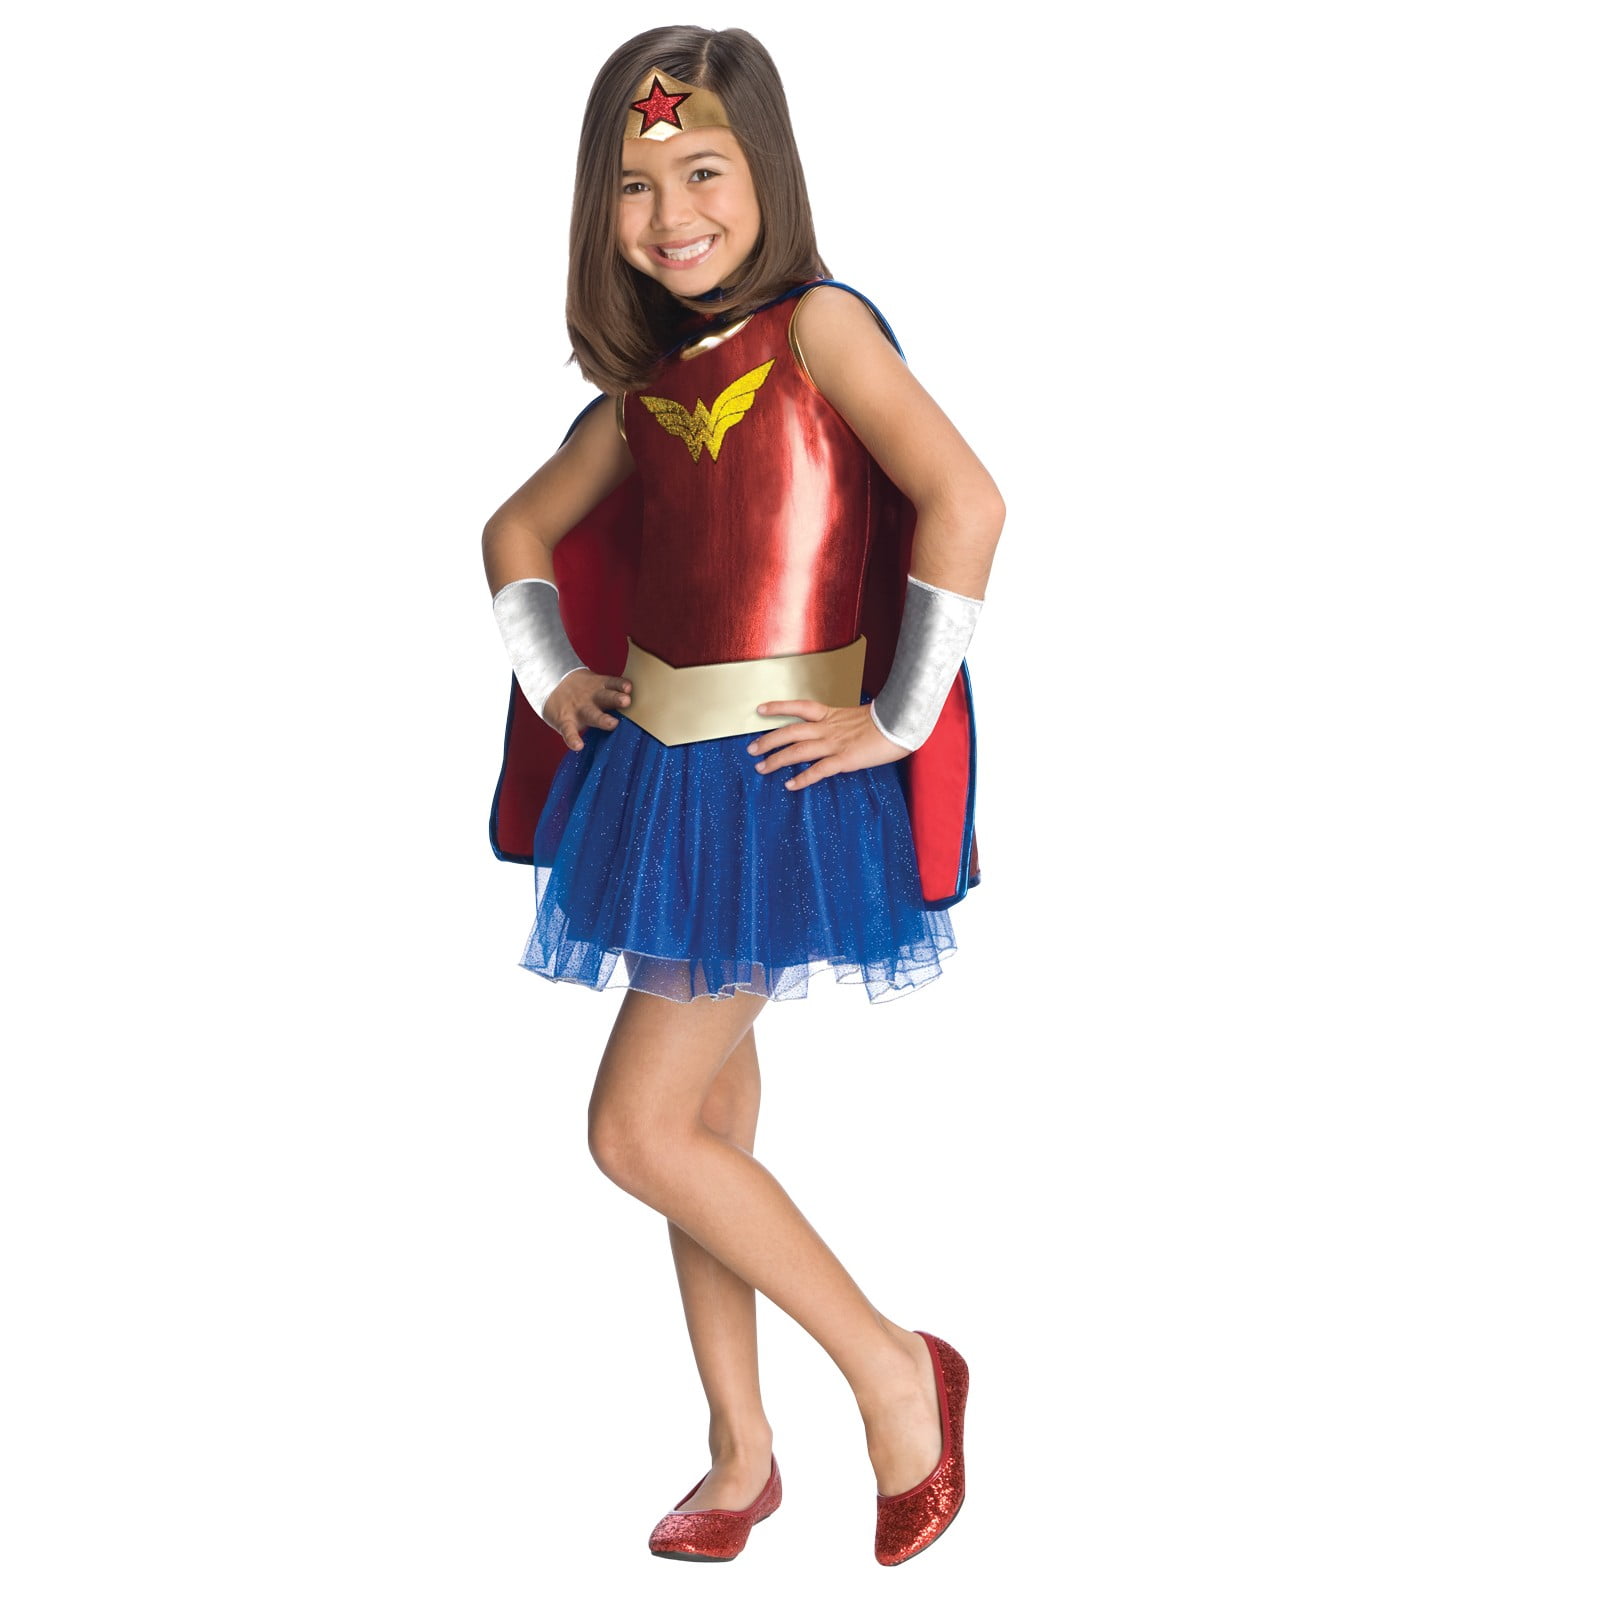 Kids Girls Wonder Women Dress Up Crown Arm Gauntlets Fancy Costume Accessories